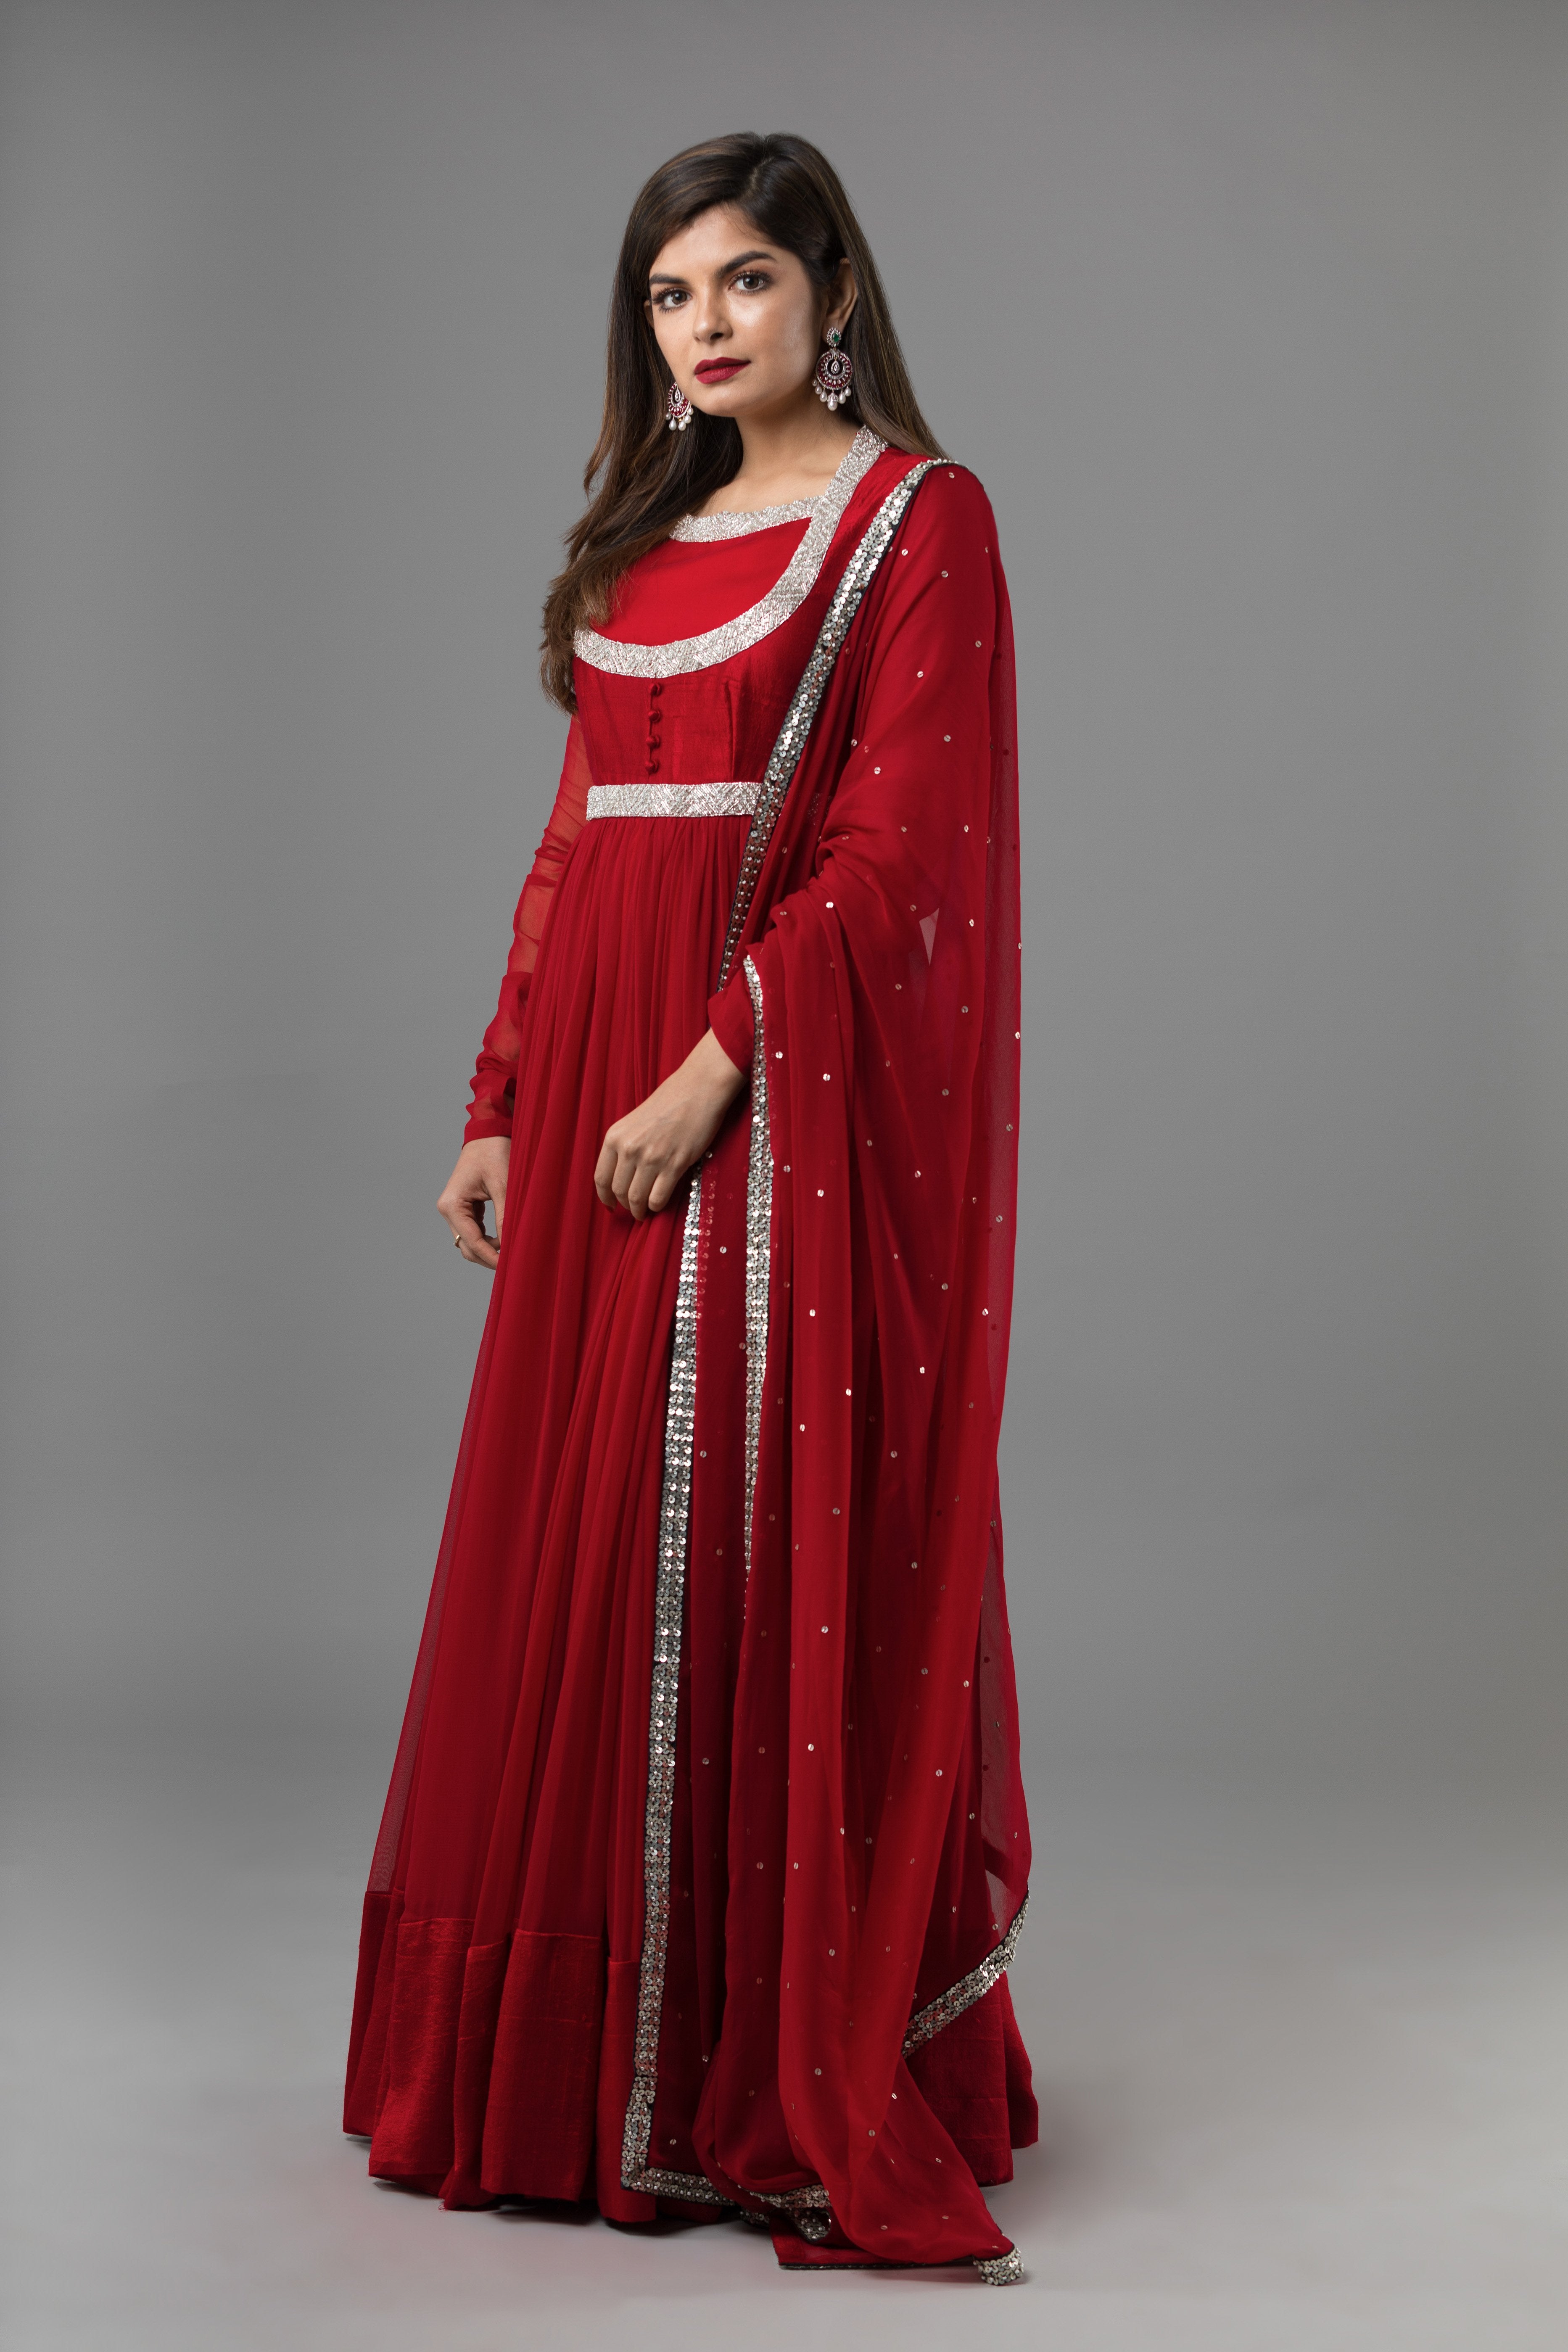 Sanjhana Reddy - Red Embroidered Anarkali